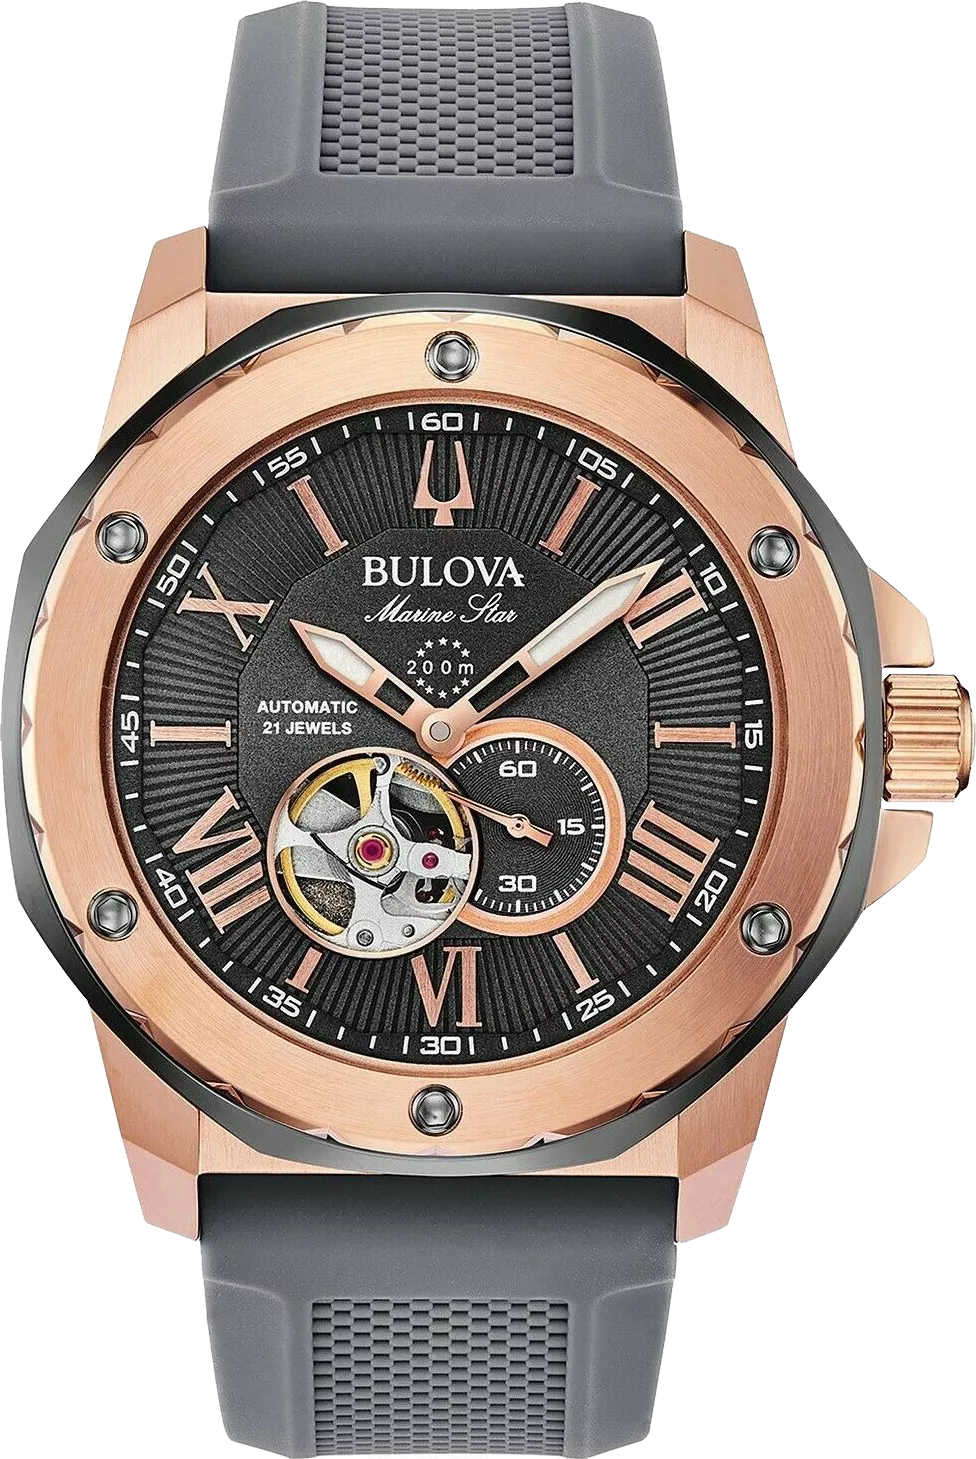 MSP: 86194 Bulova Marine Star Automatic Watch 45mm 14,210,000